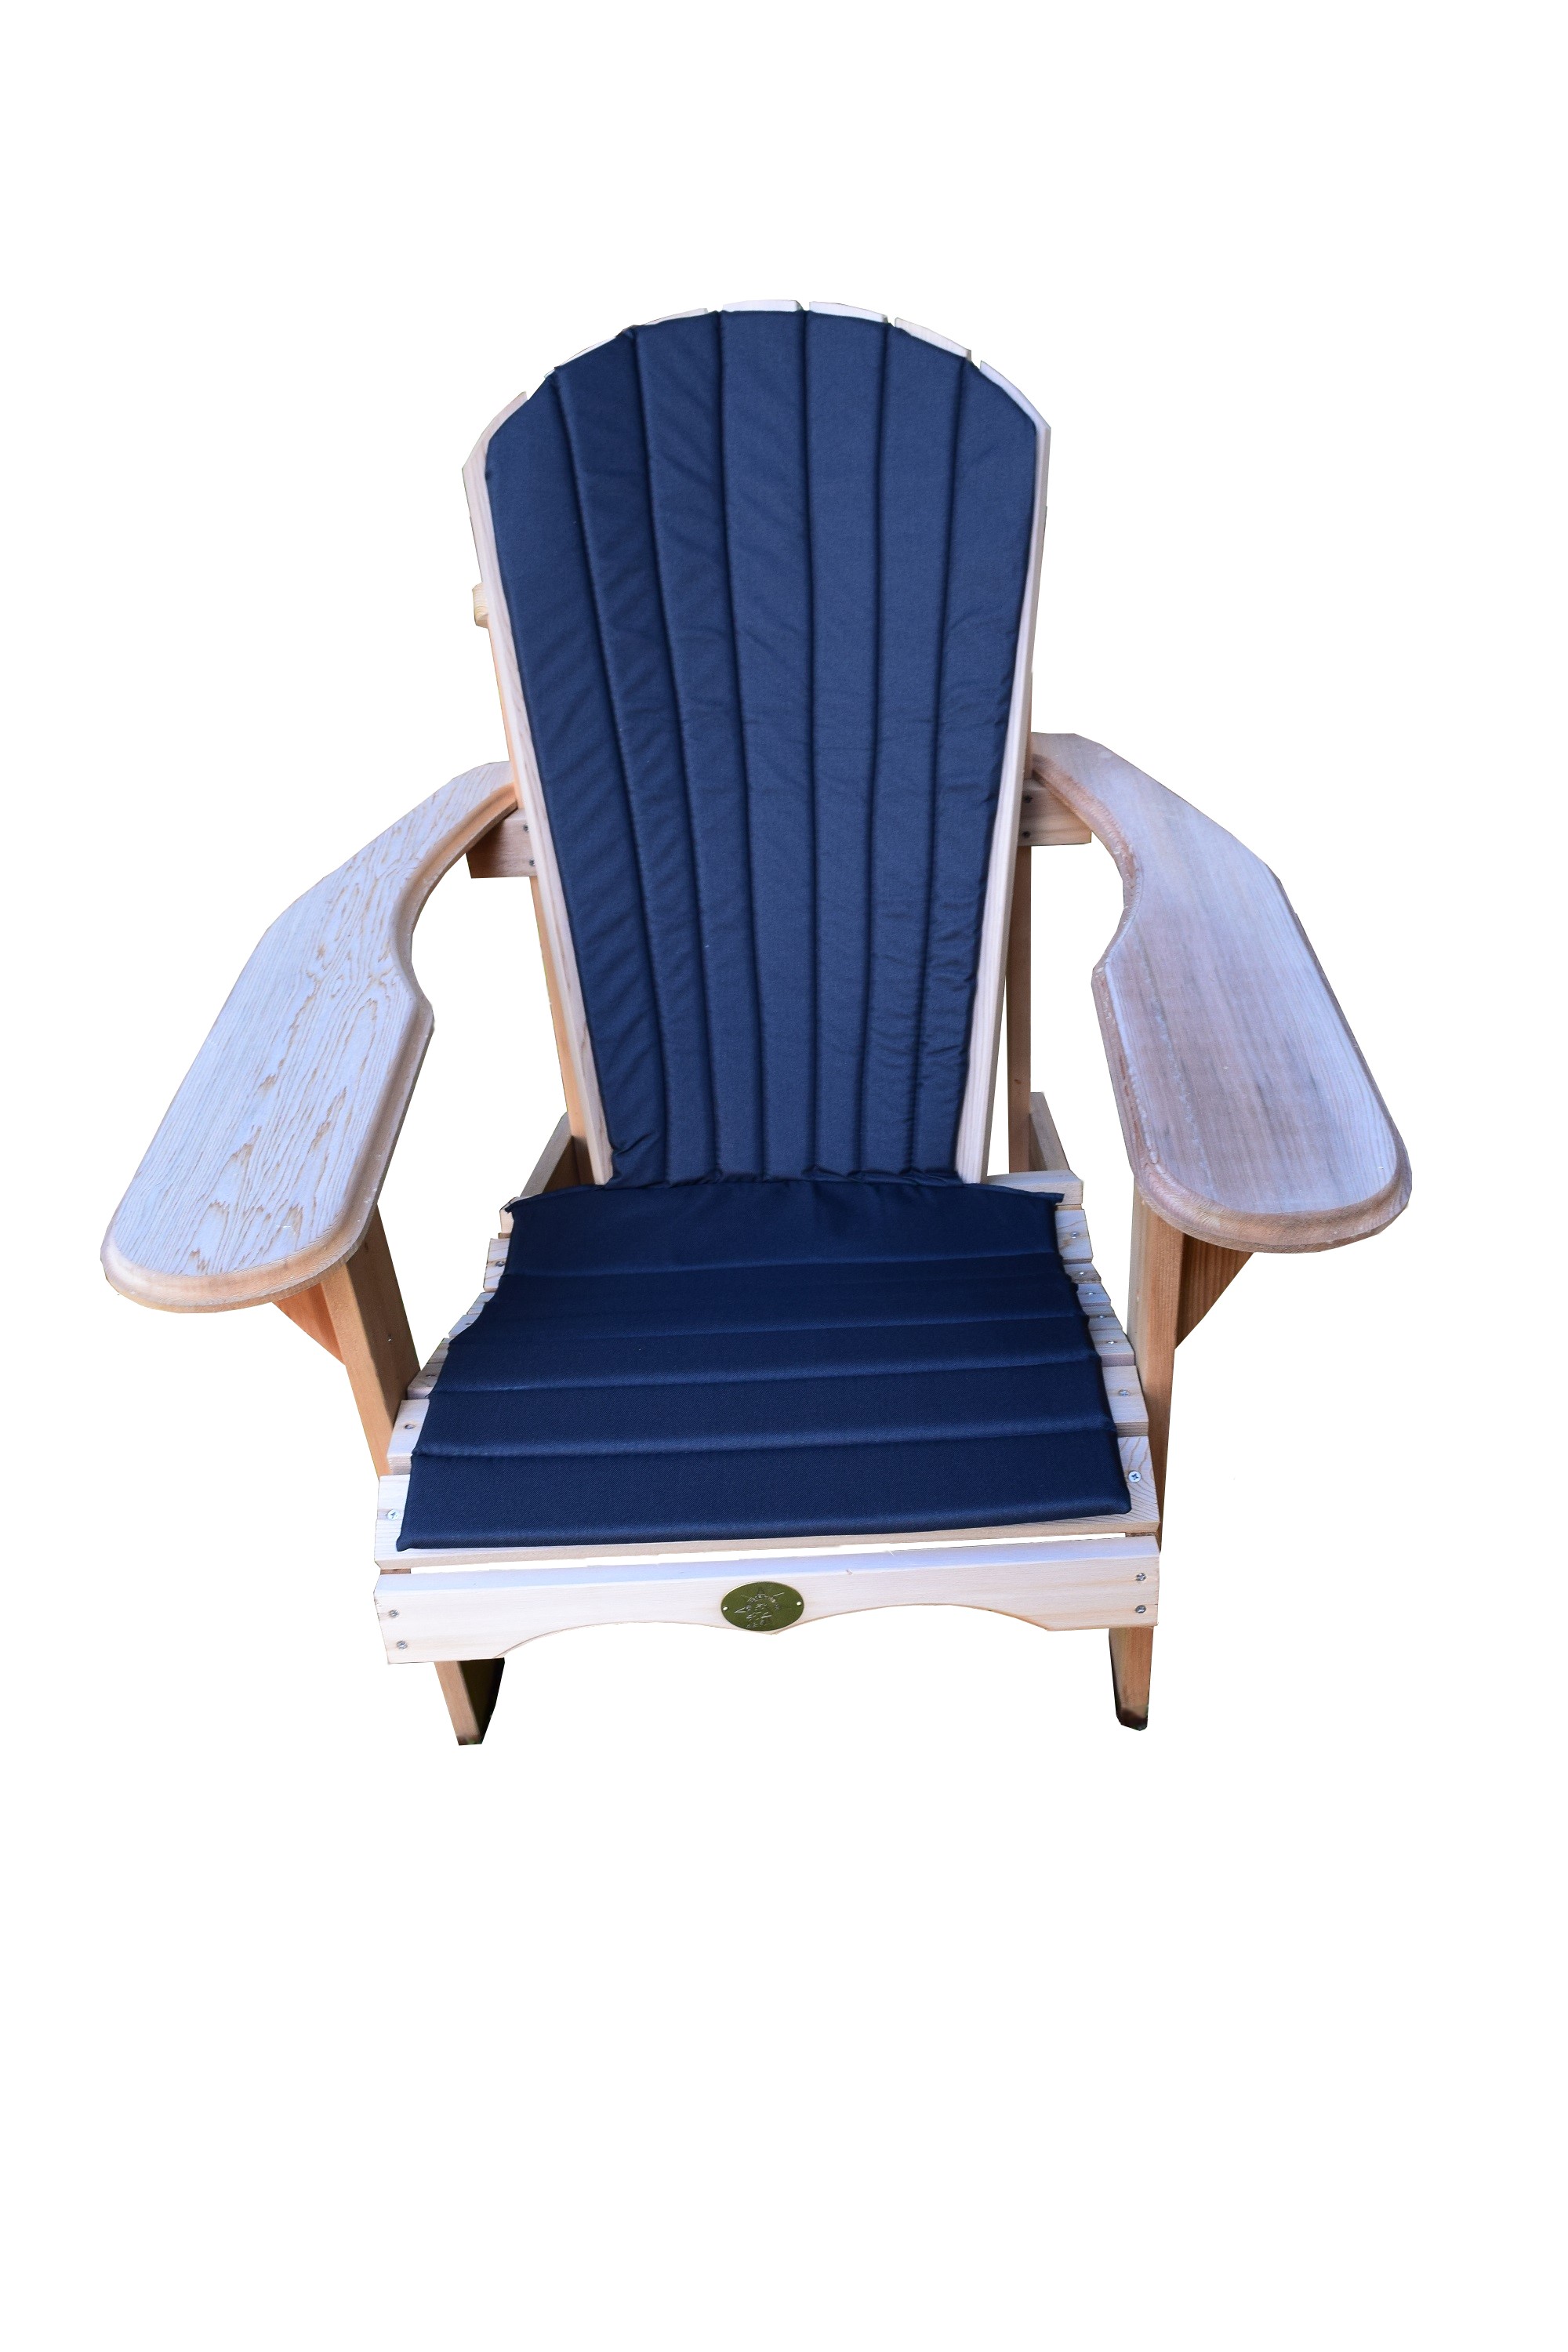 Image of Bear Chair 7 slat Exterior Chair Cushion, Black